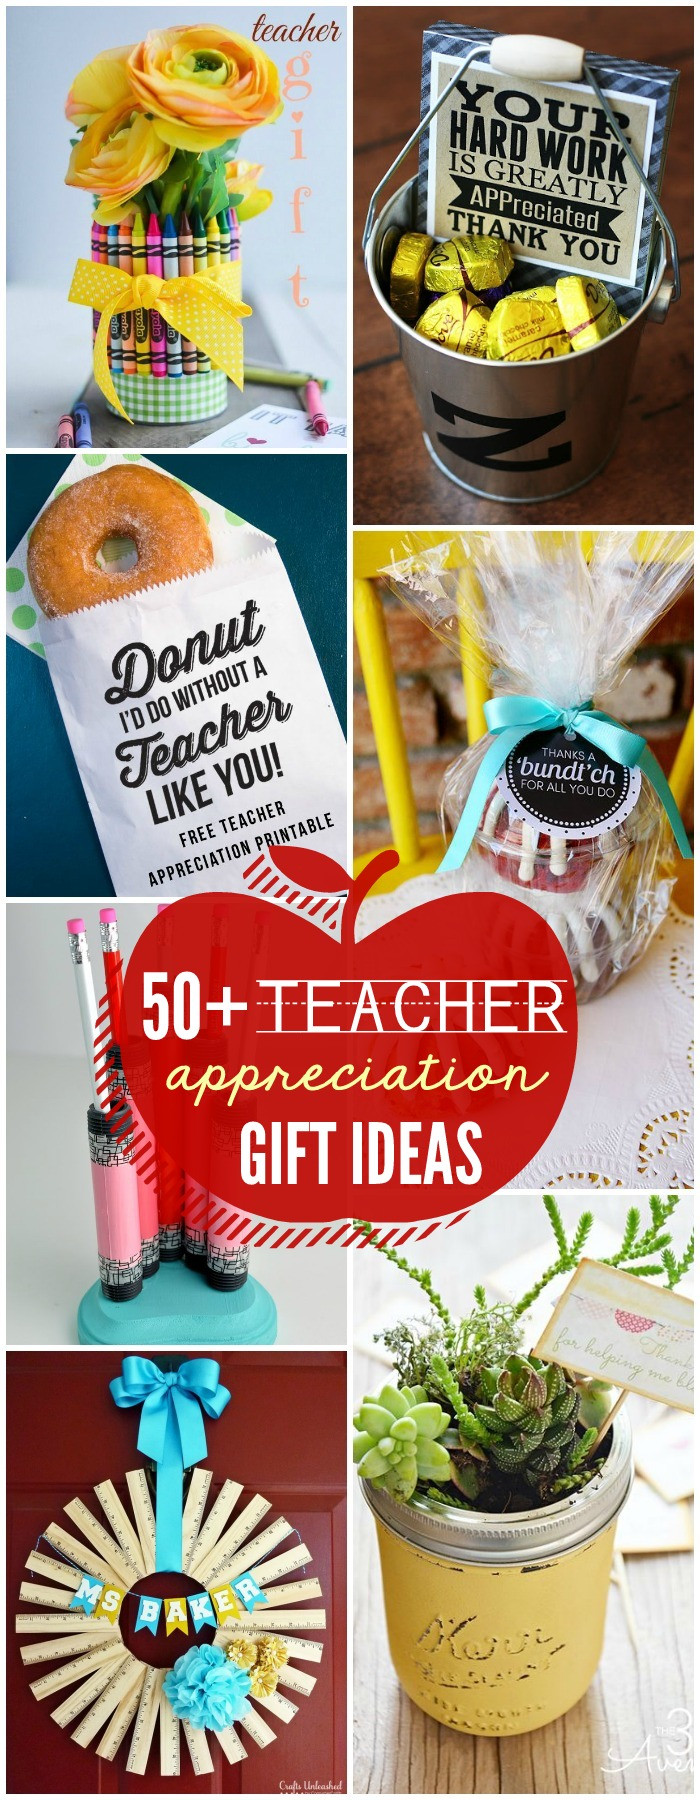 Best ideas about Teacher Gift Ideas
. Save or Pin Teacher Appreciation Gift Ideas Now.